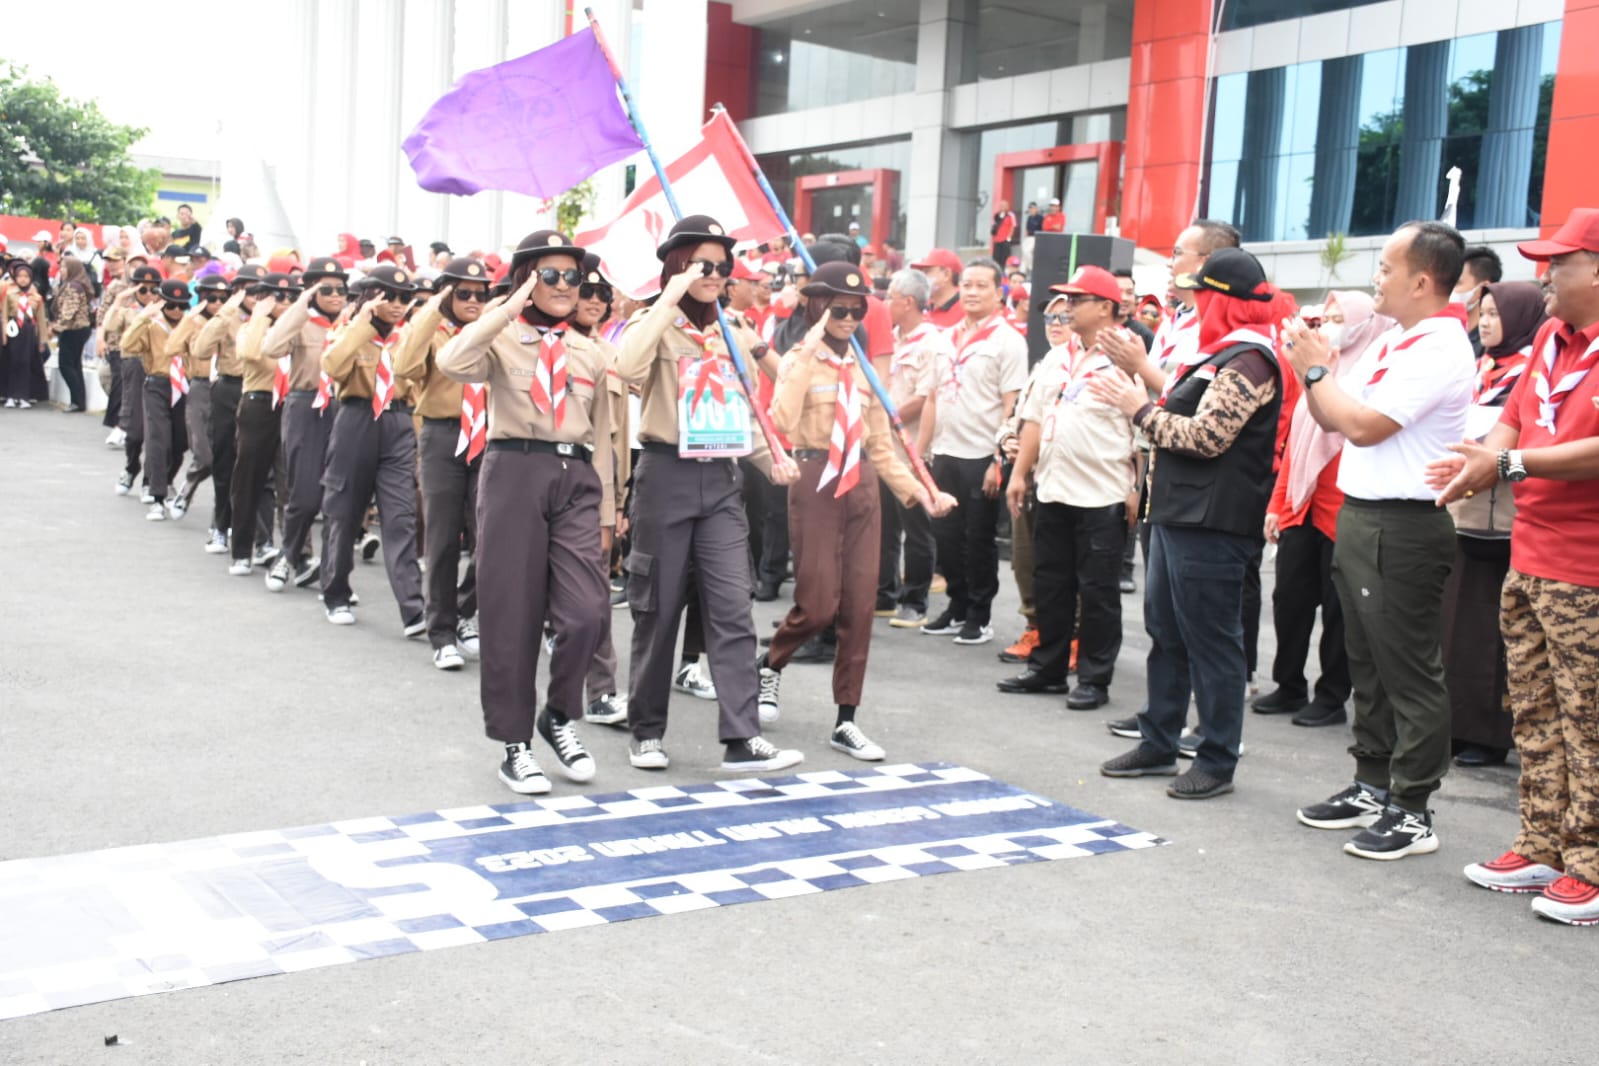 Lomba Gerak Jalan Beregu Kwartir Cabang Pramuka Bandar Lampung Diikuti 9.041 Peserta, Ini Daftar Juaranya